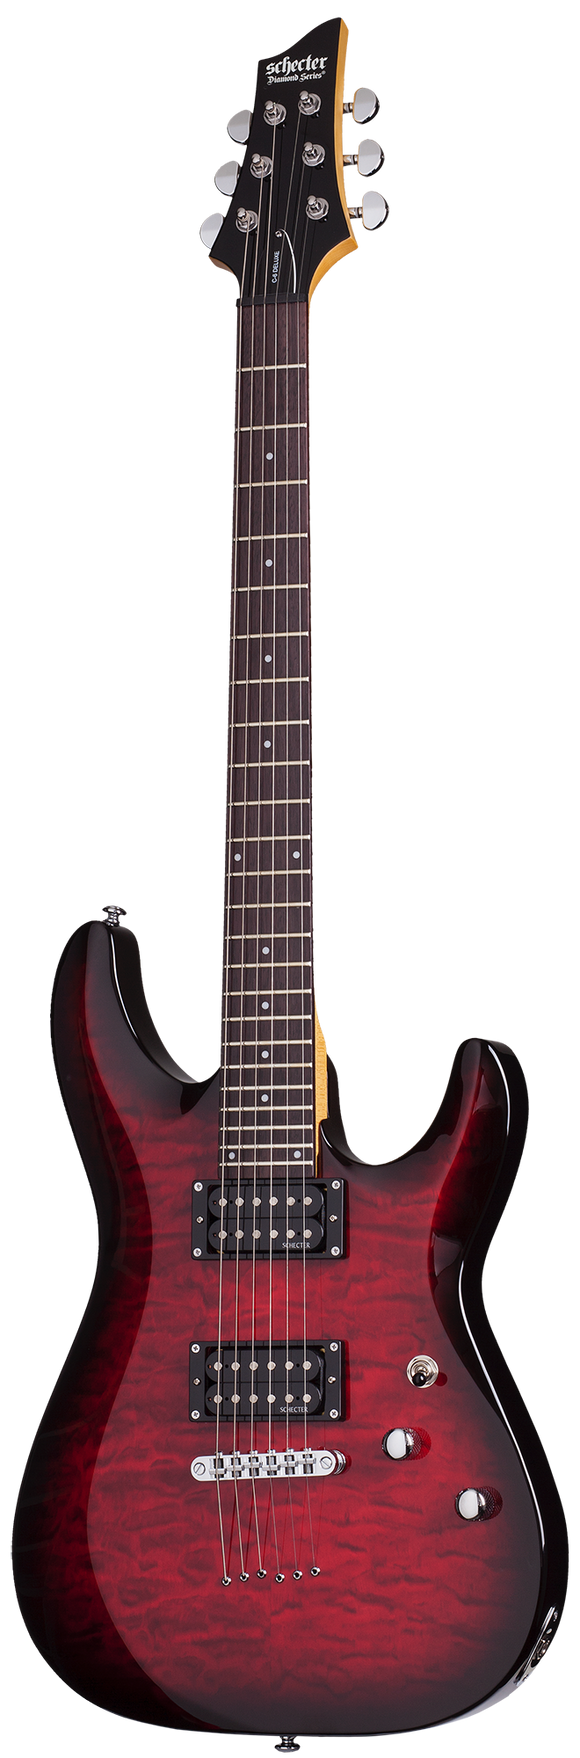 Schecter C-6 Plus 6 String Electric Guitar - Transparent Cherry Burst